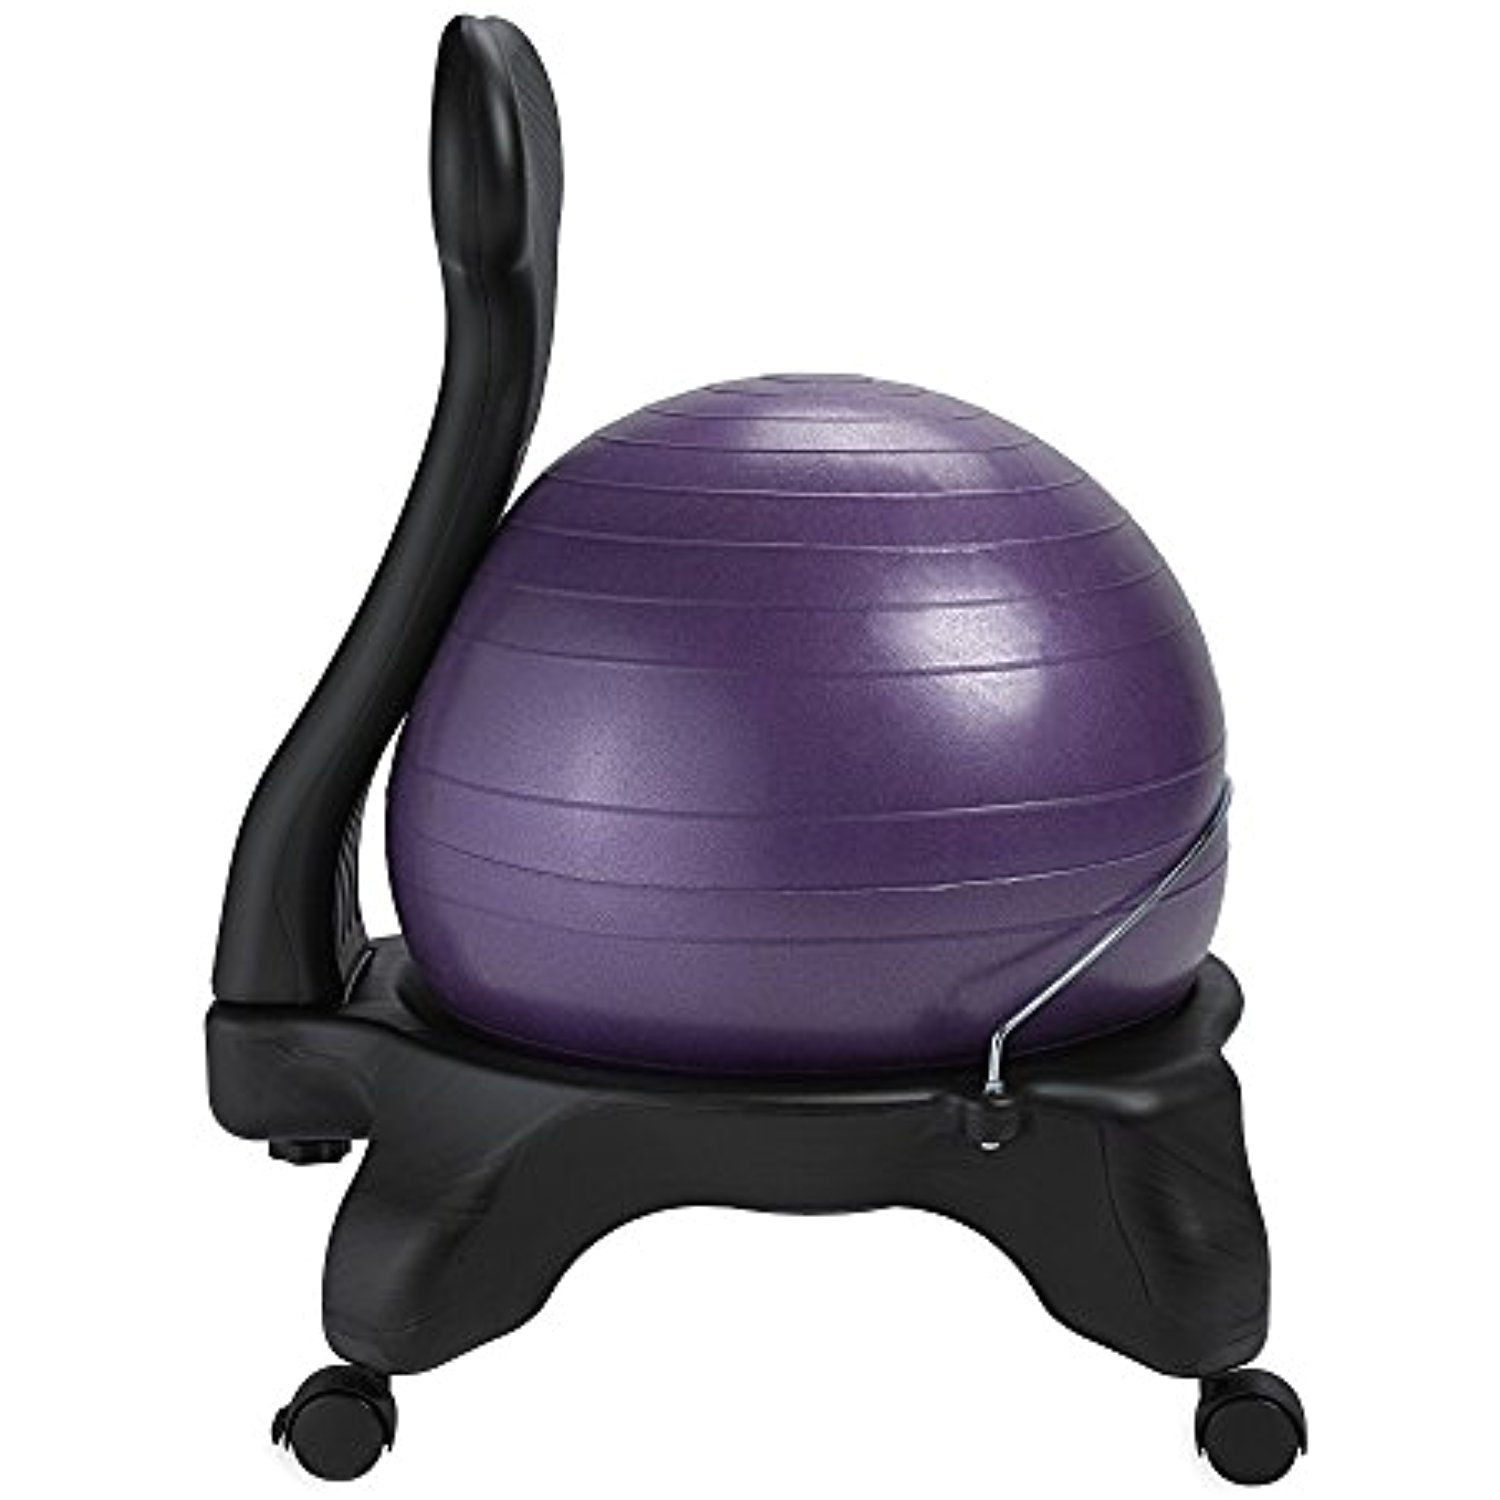 Gaiam Backless Classic Balance Ball Chair 21 Awesome Gaiam Ball Chair Car Modification